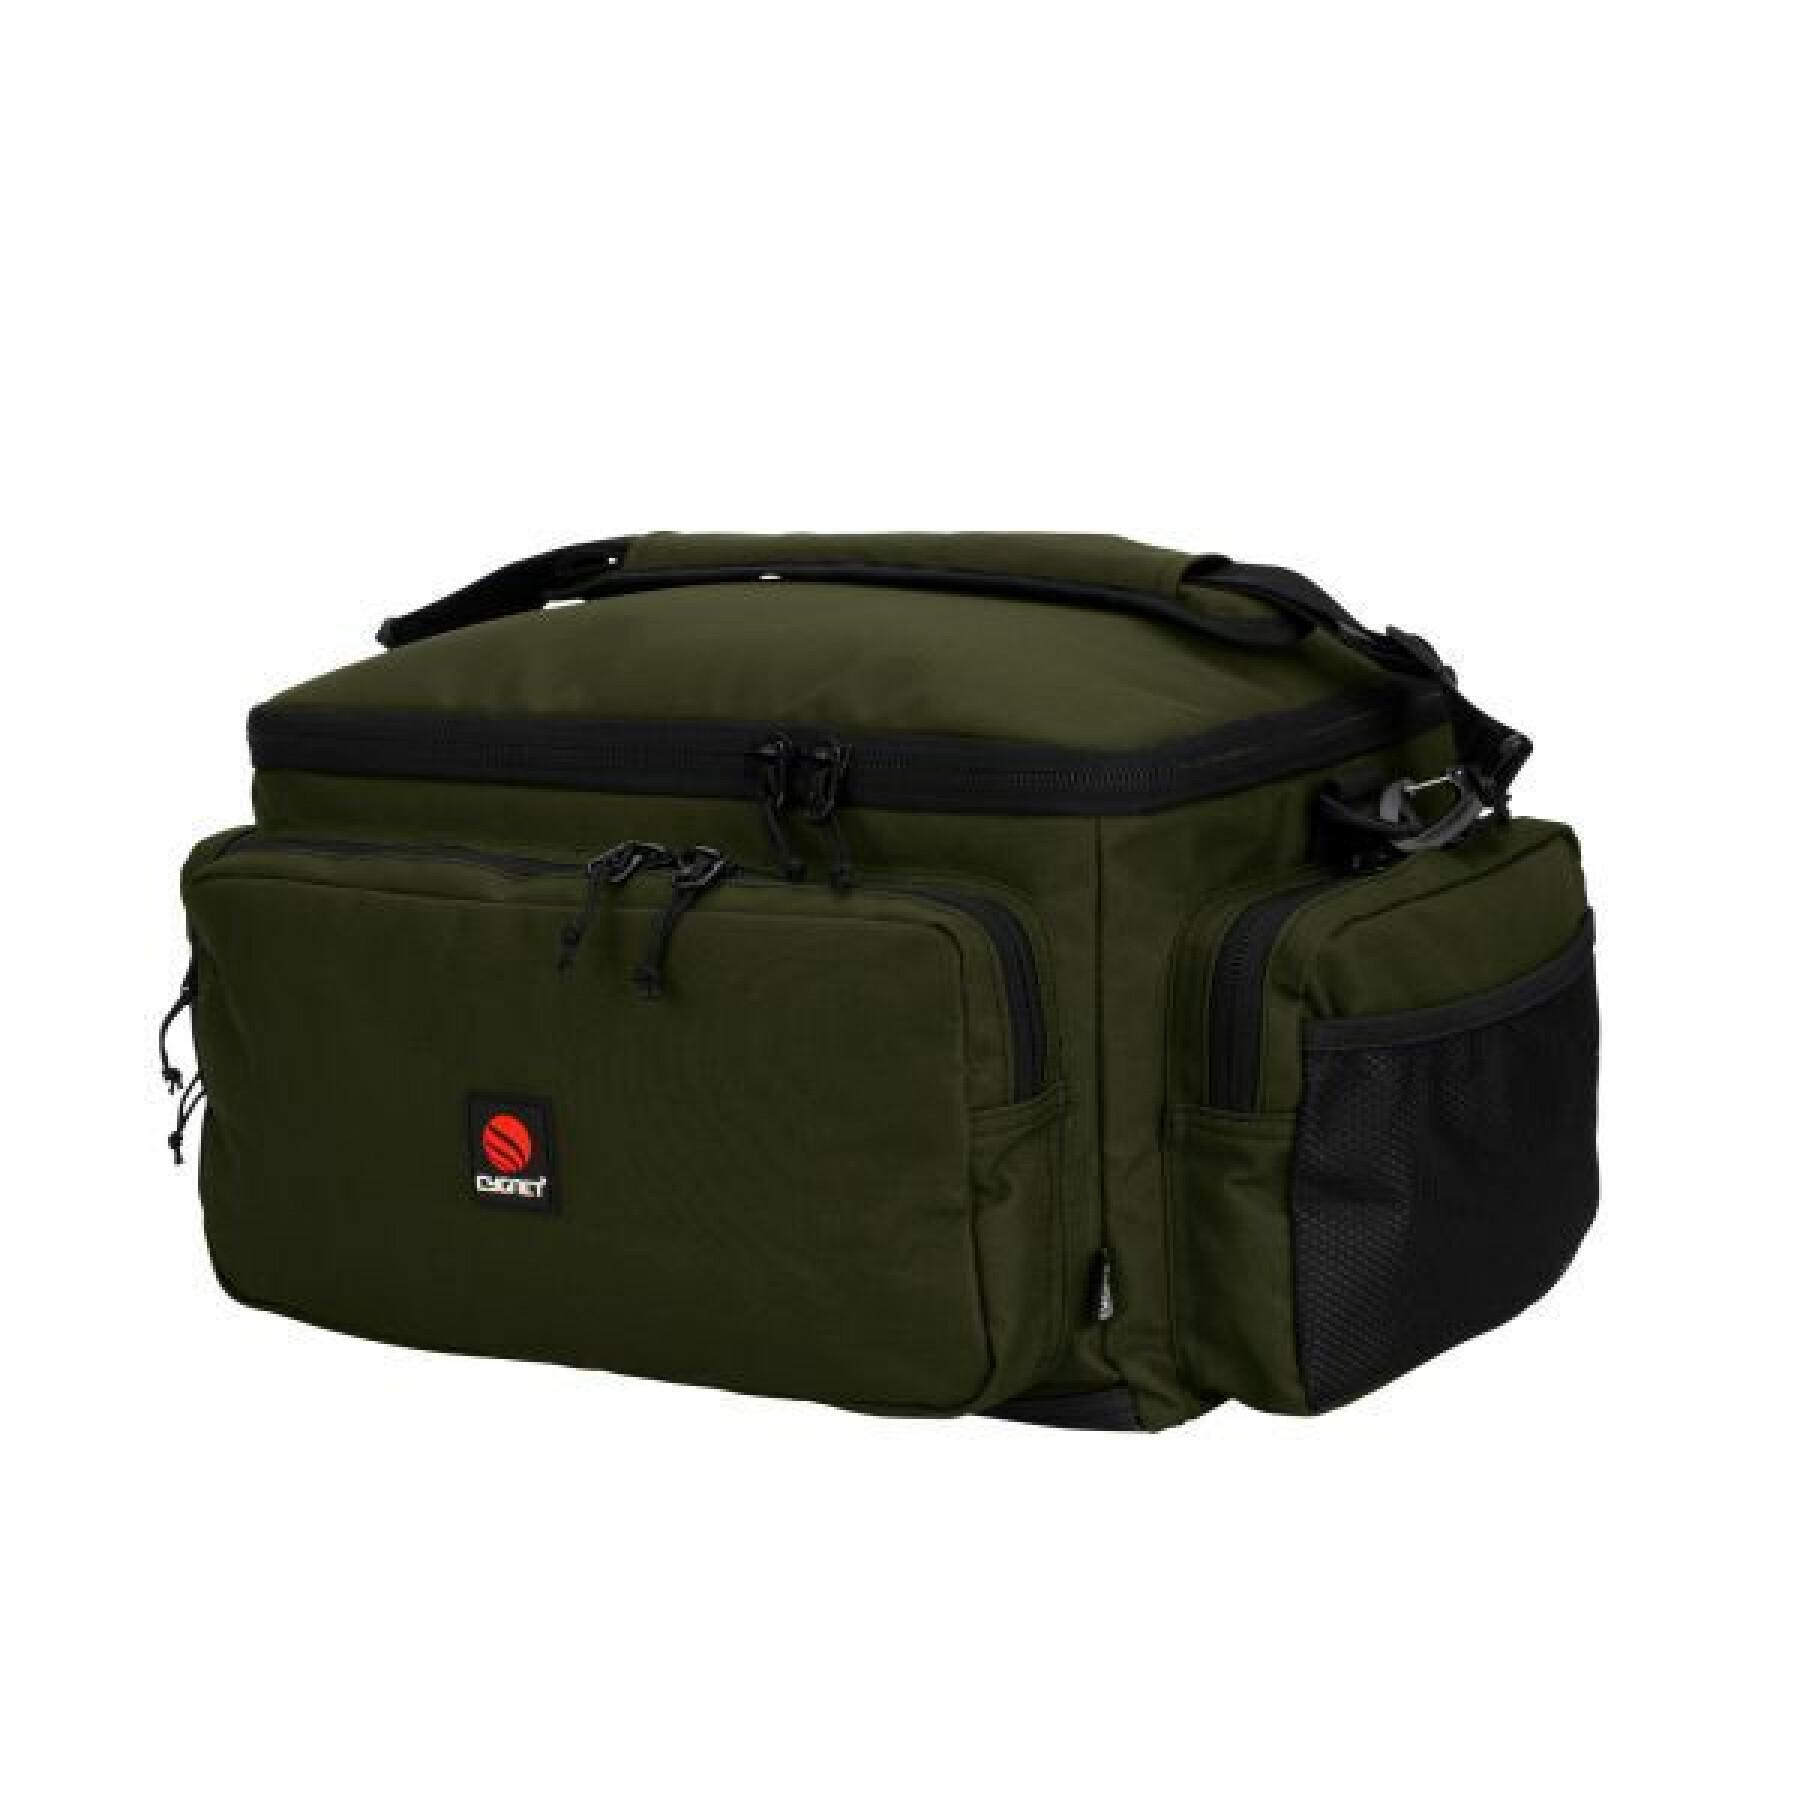 Bag Cygnet compact carryall